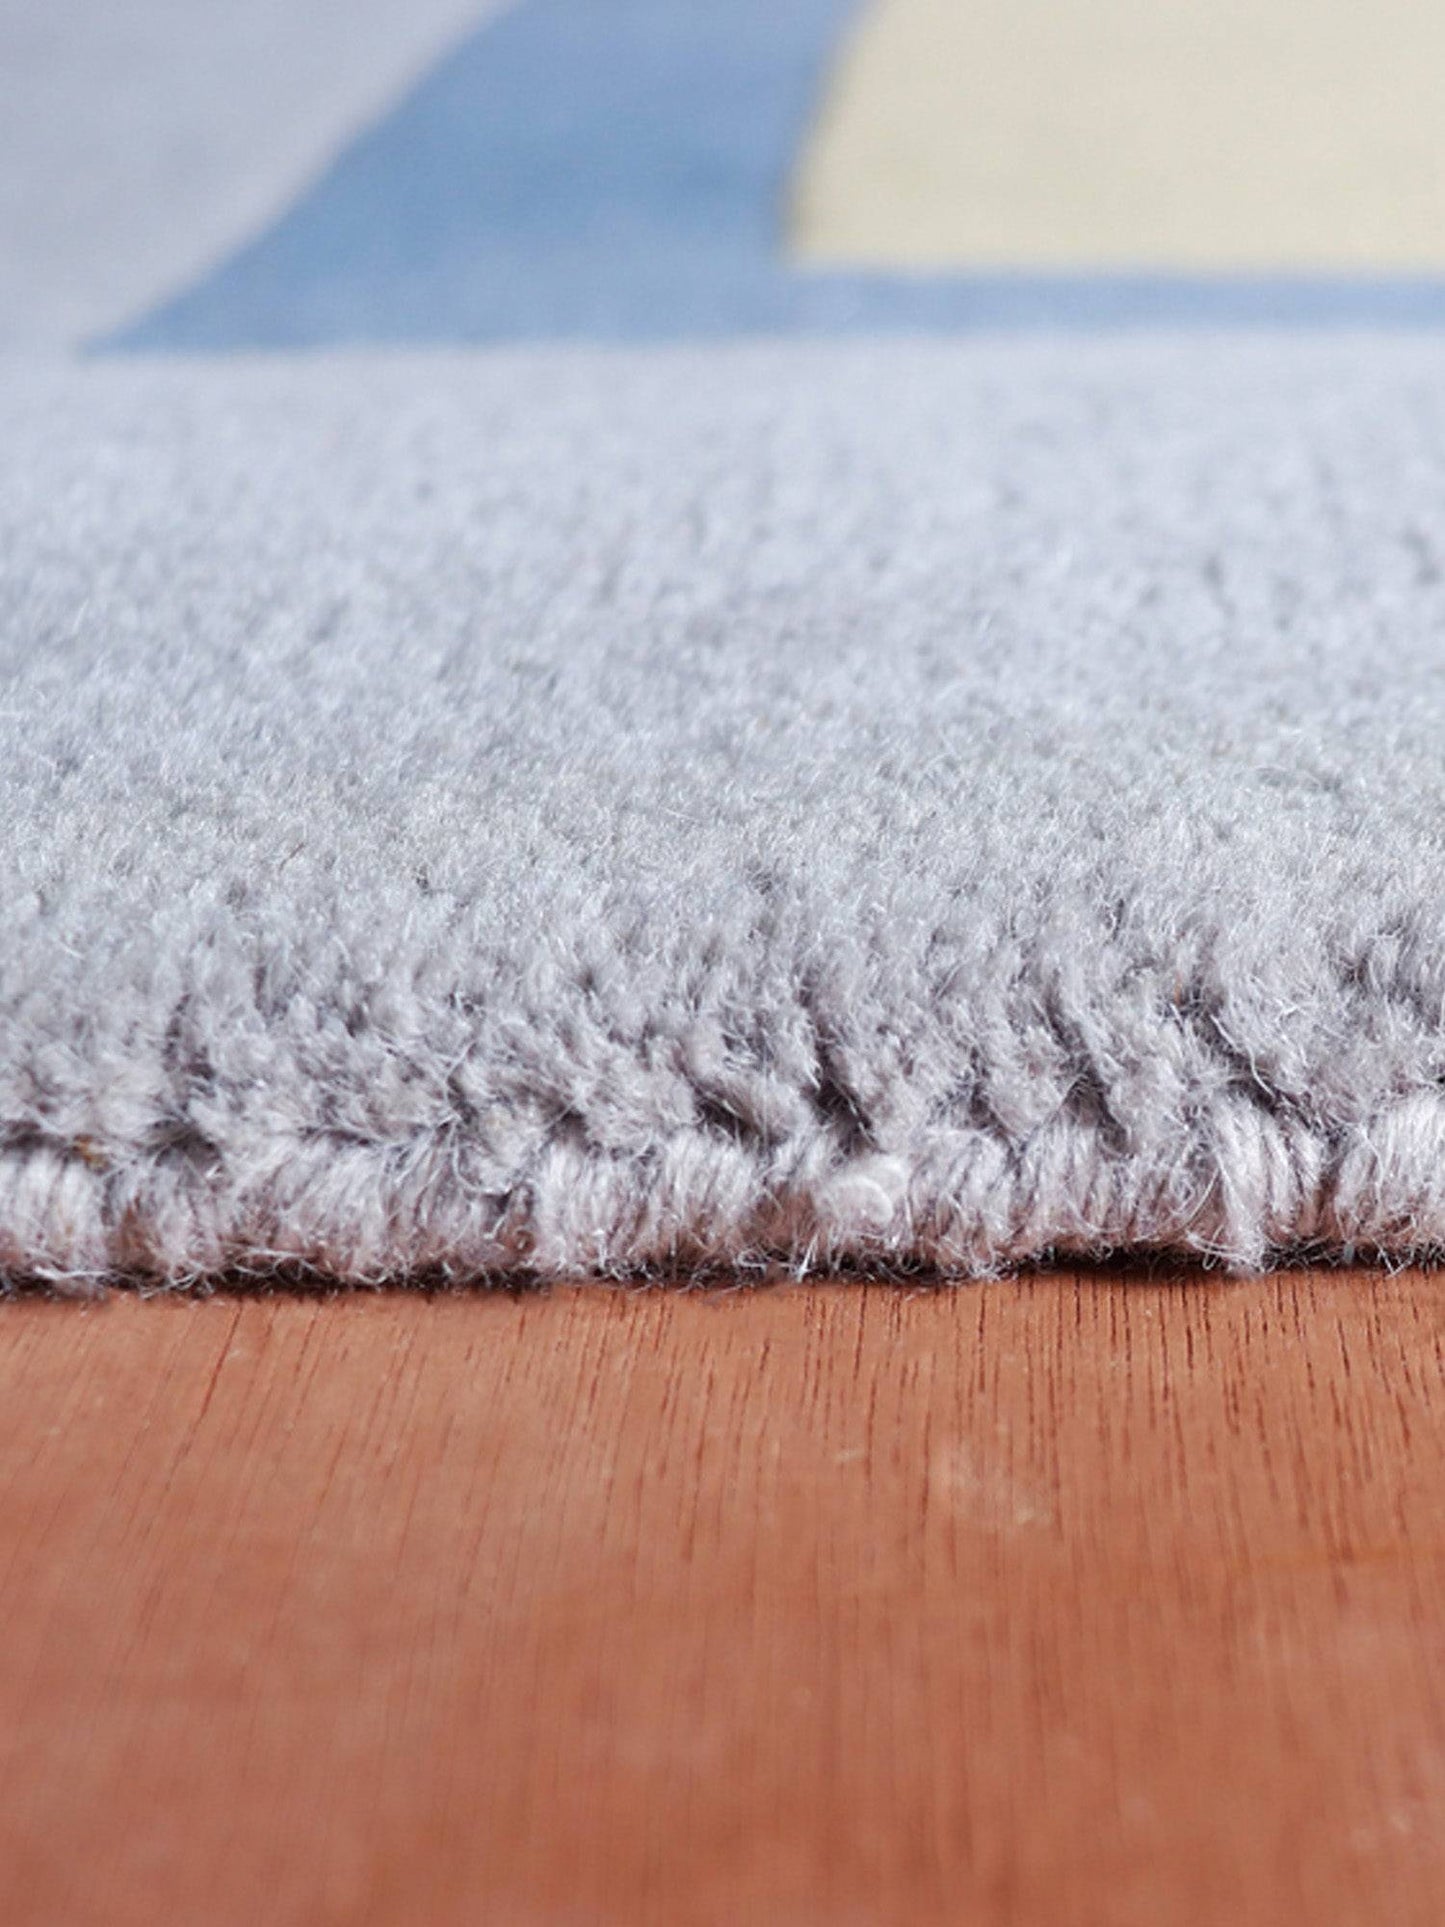 Carpet Hand Tufted 100% Woollen Modern Border Stripes Beige, Blue And Yellow - 4ft X 6ft